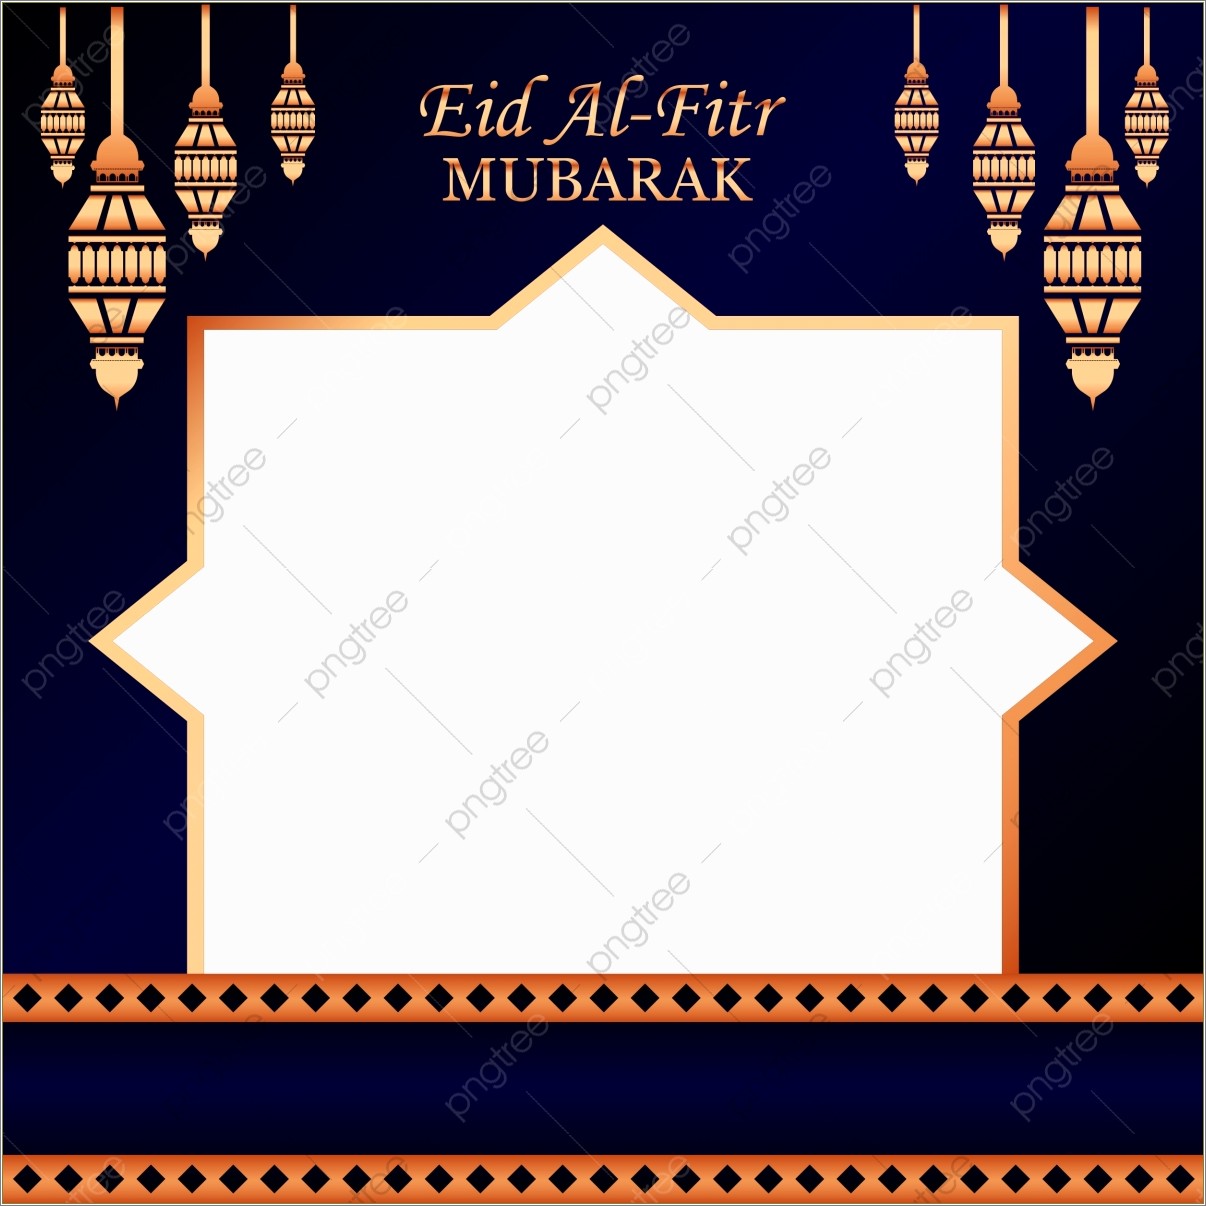 Eid Mubarak Template Vector Free Download